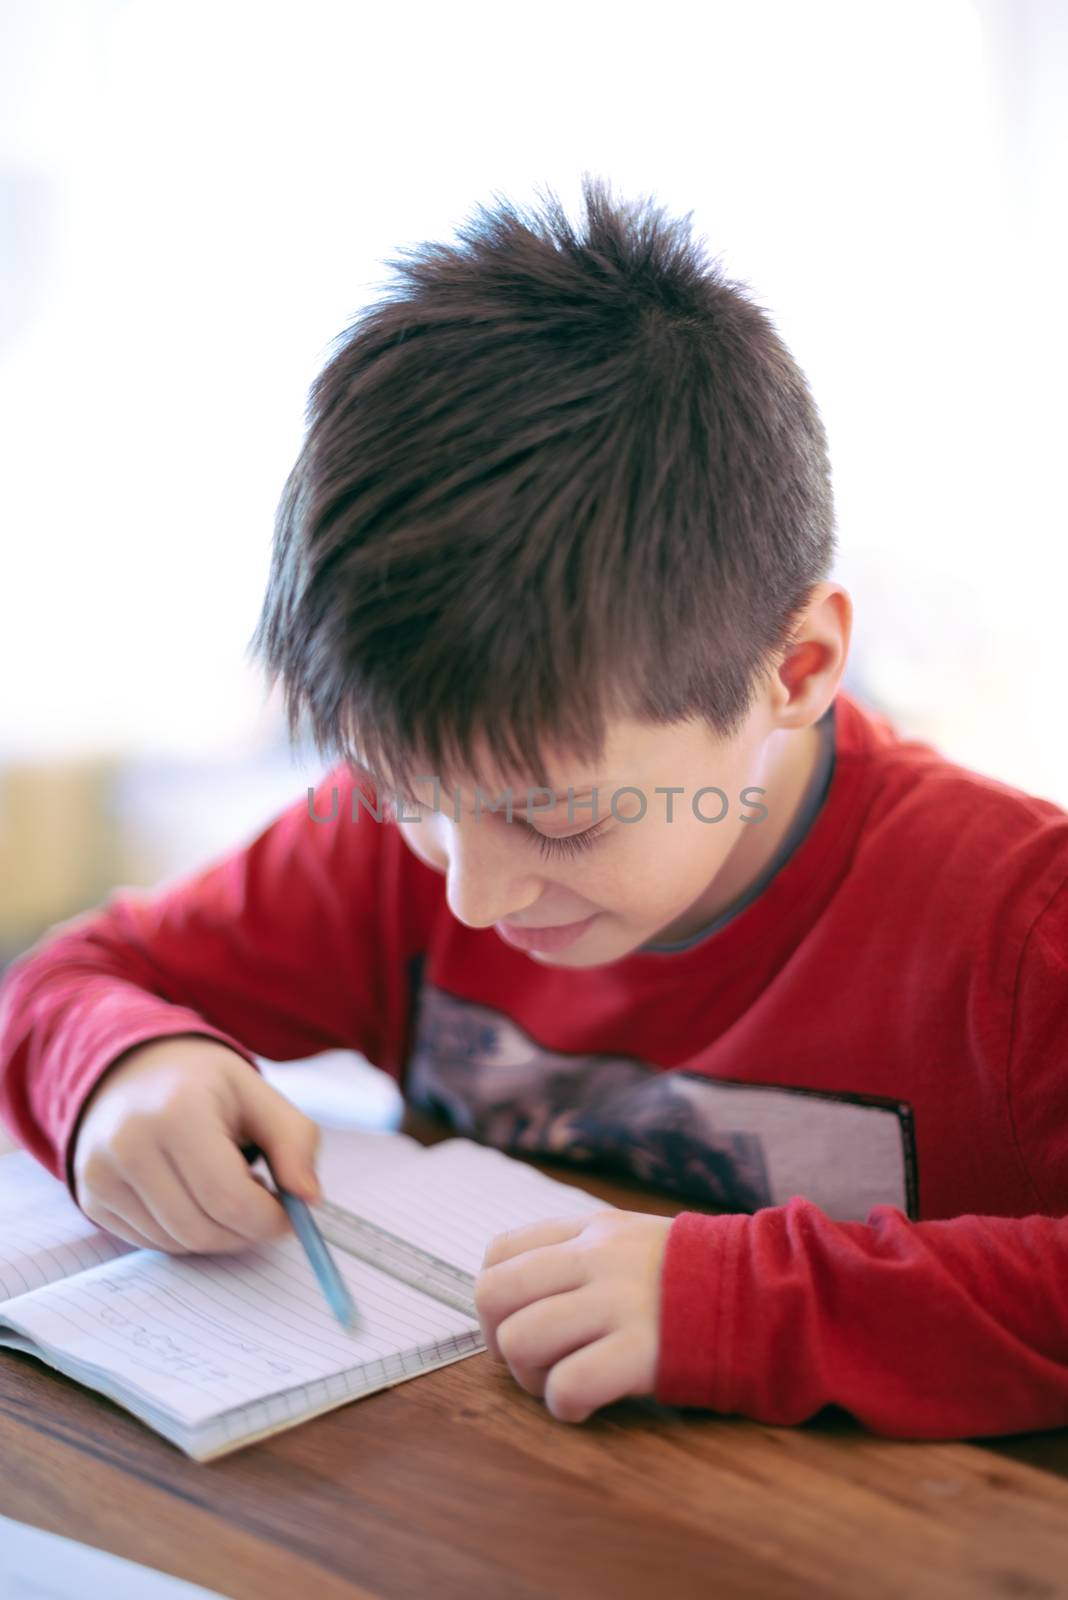 Boy doing homework mathematics at home